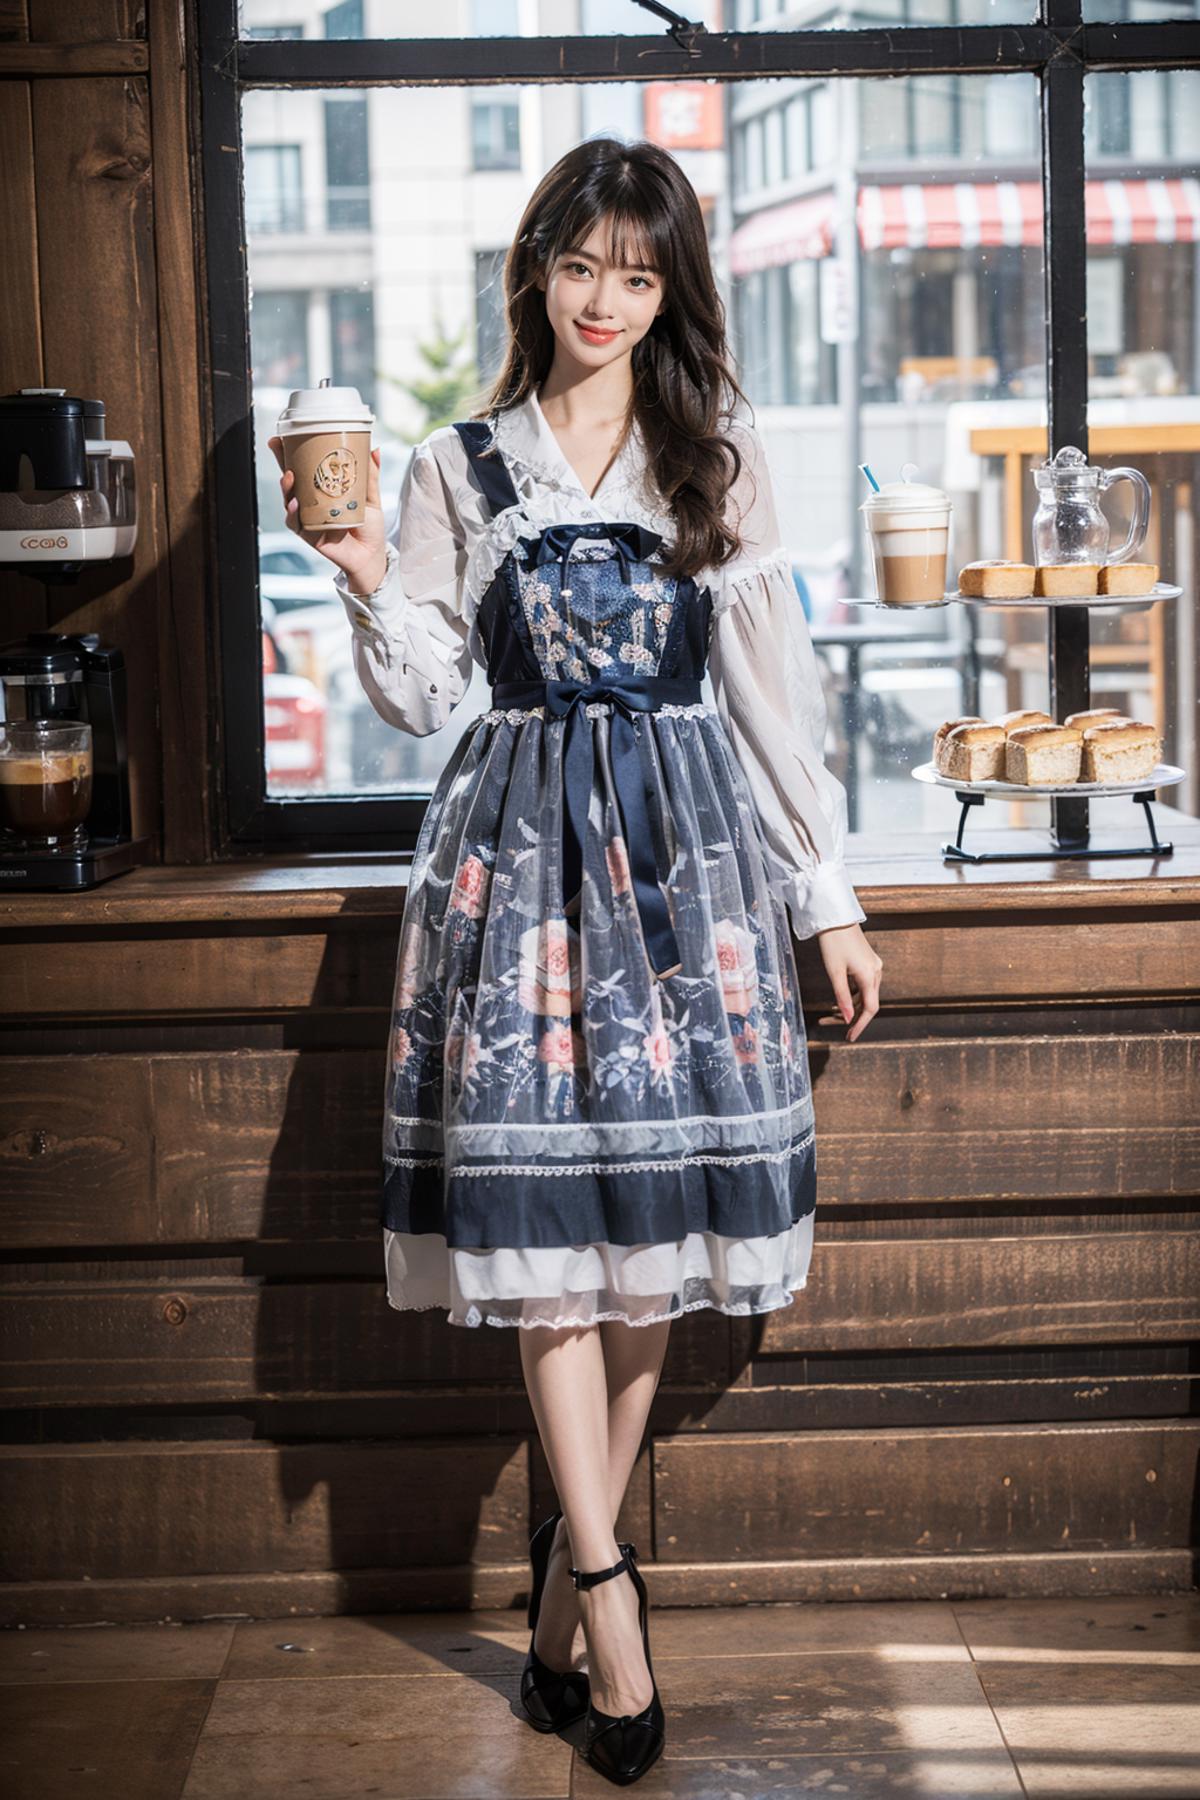 [Realistic] Beautiful dress collection | 一些好看的裙子 image by cyberAngel_